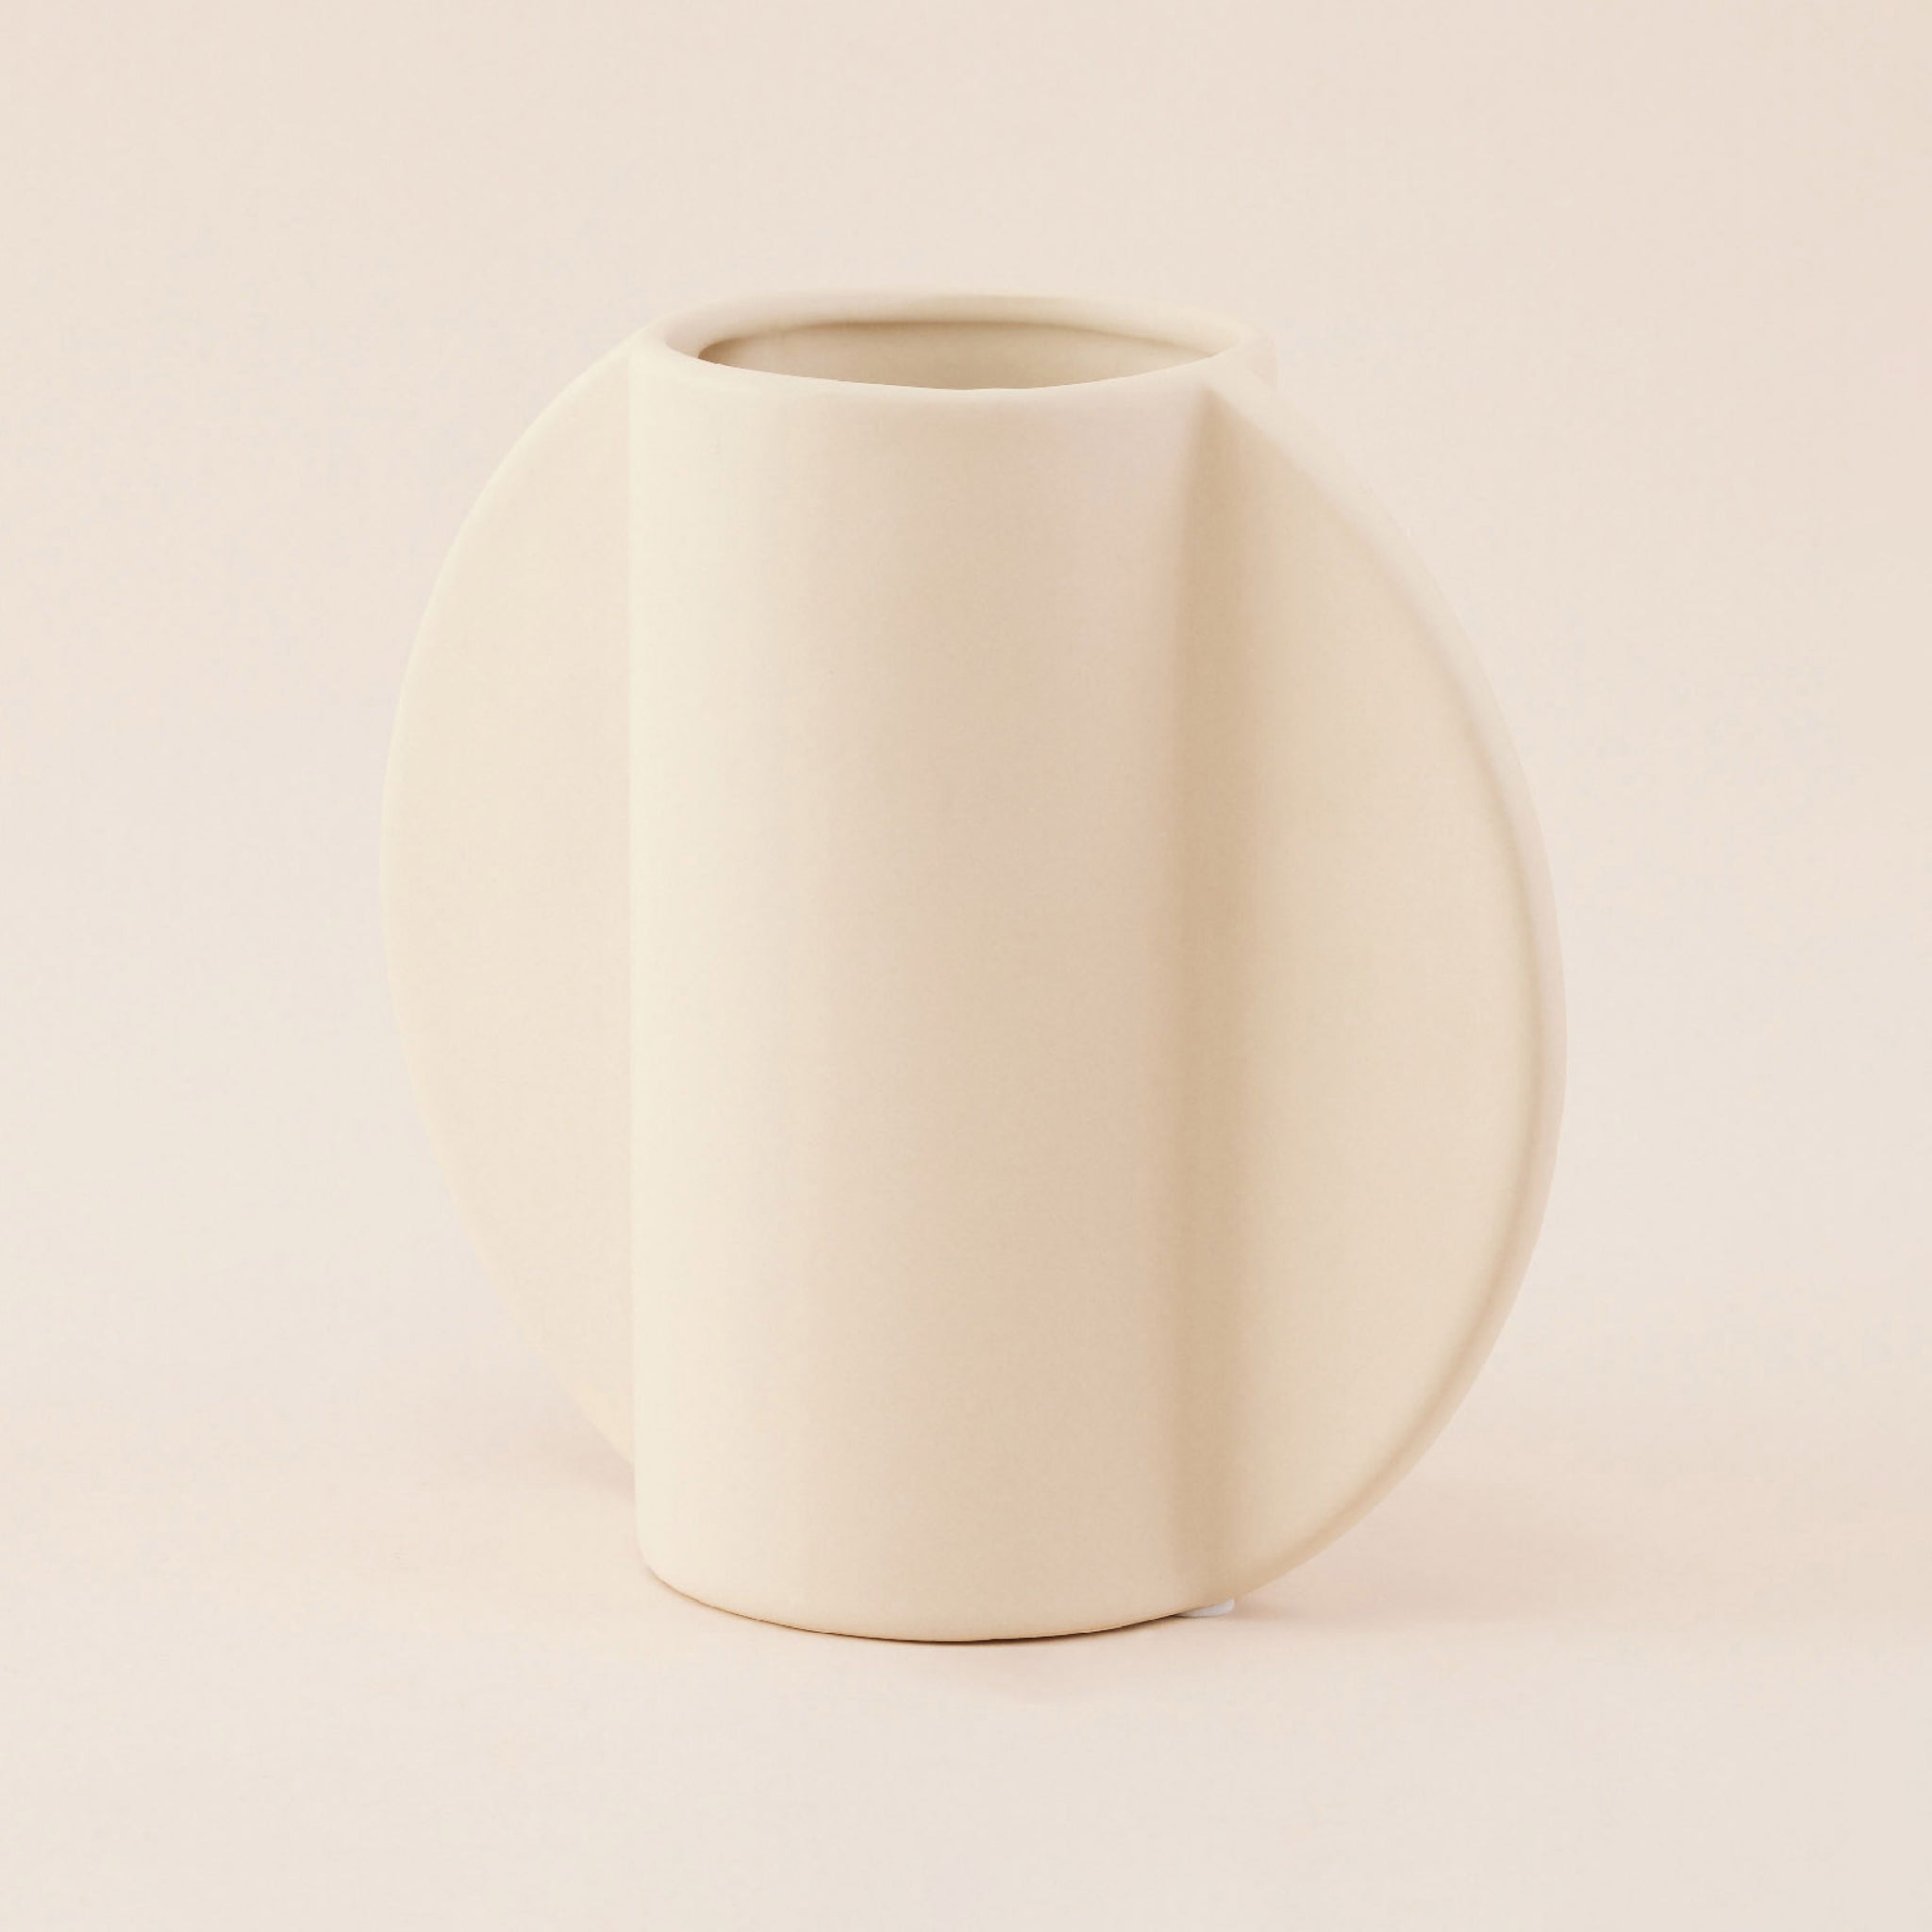 Circle-and-Tube Ceramic Vase | แจกัน เซรามิก